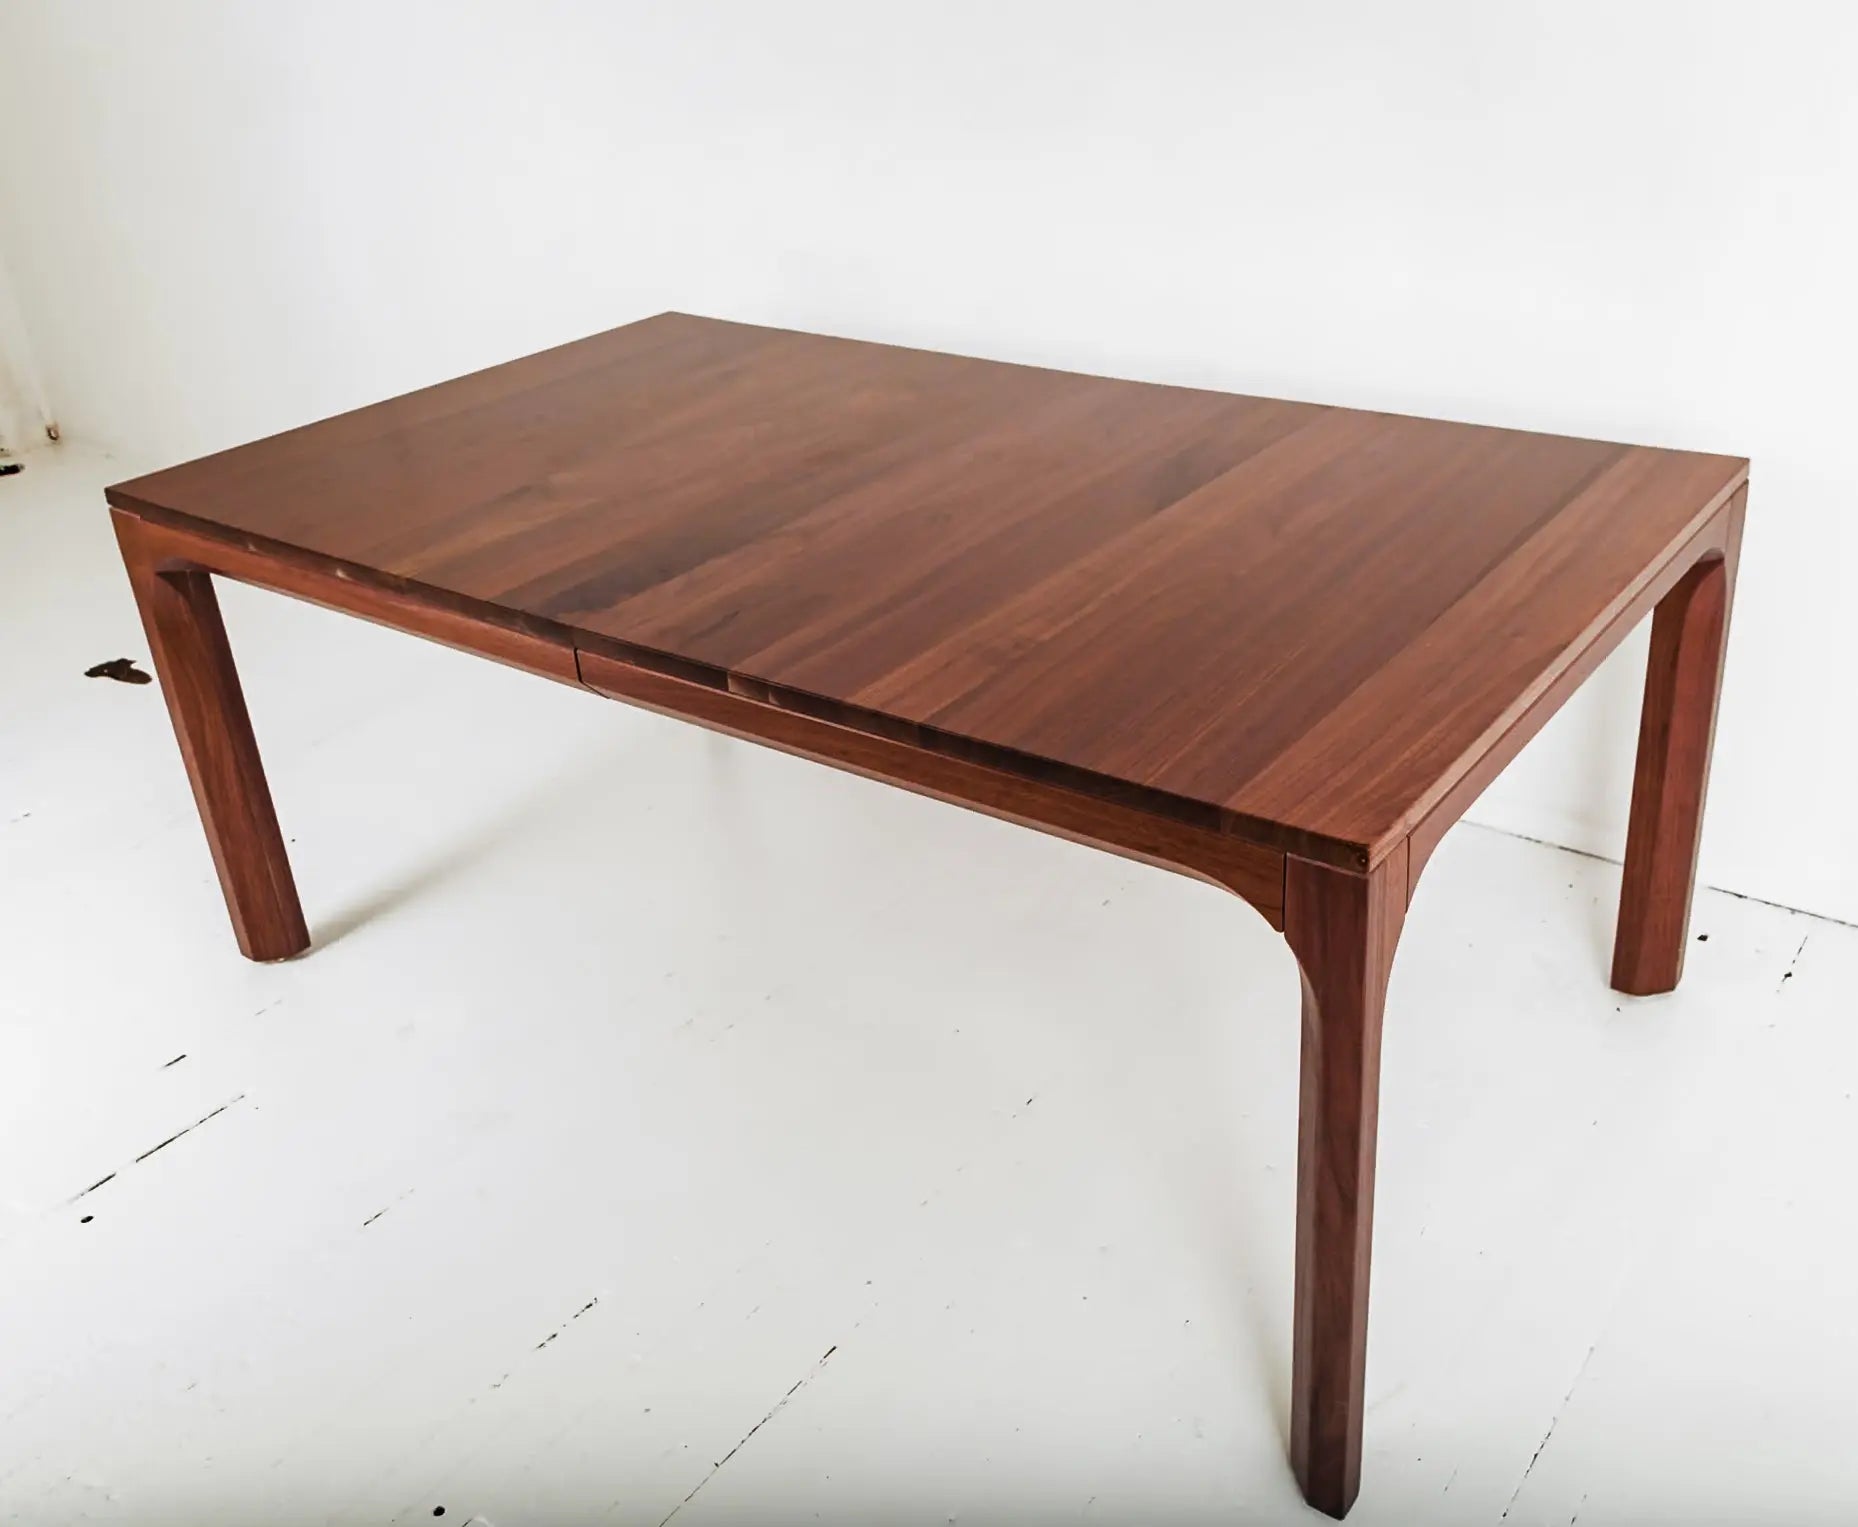 Modern Interior with Sleek Minimalist Extendable Table